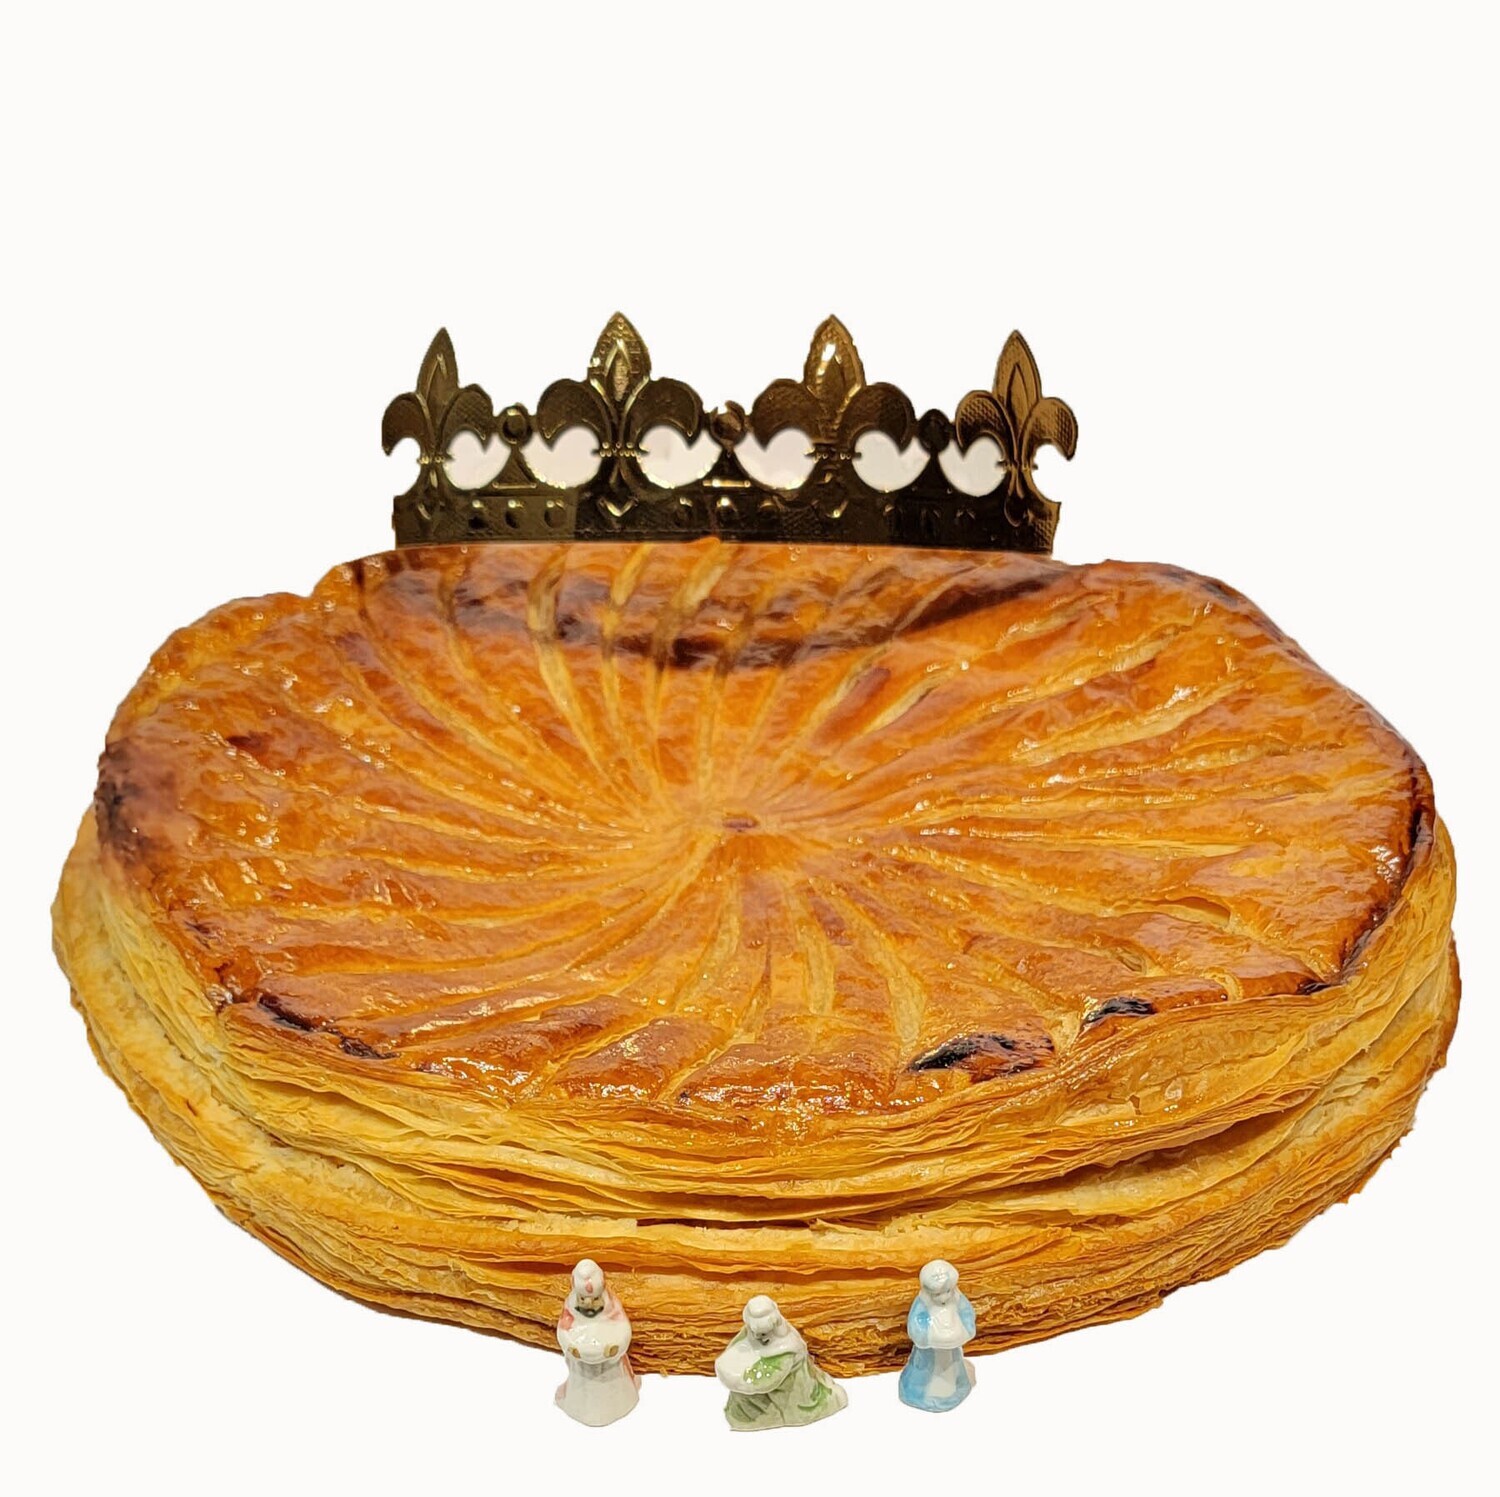 Large Galette des Rois (King's Cake)